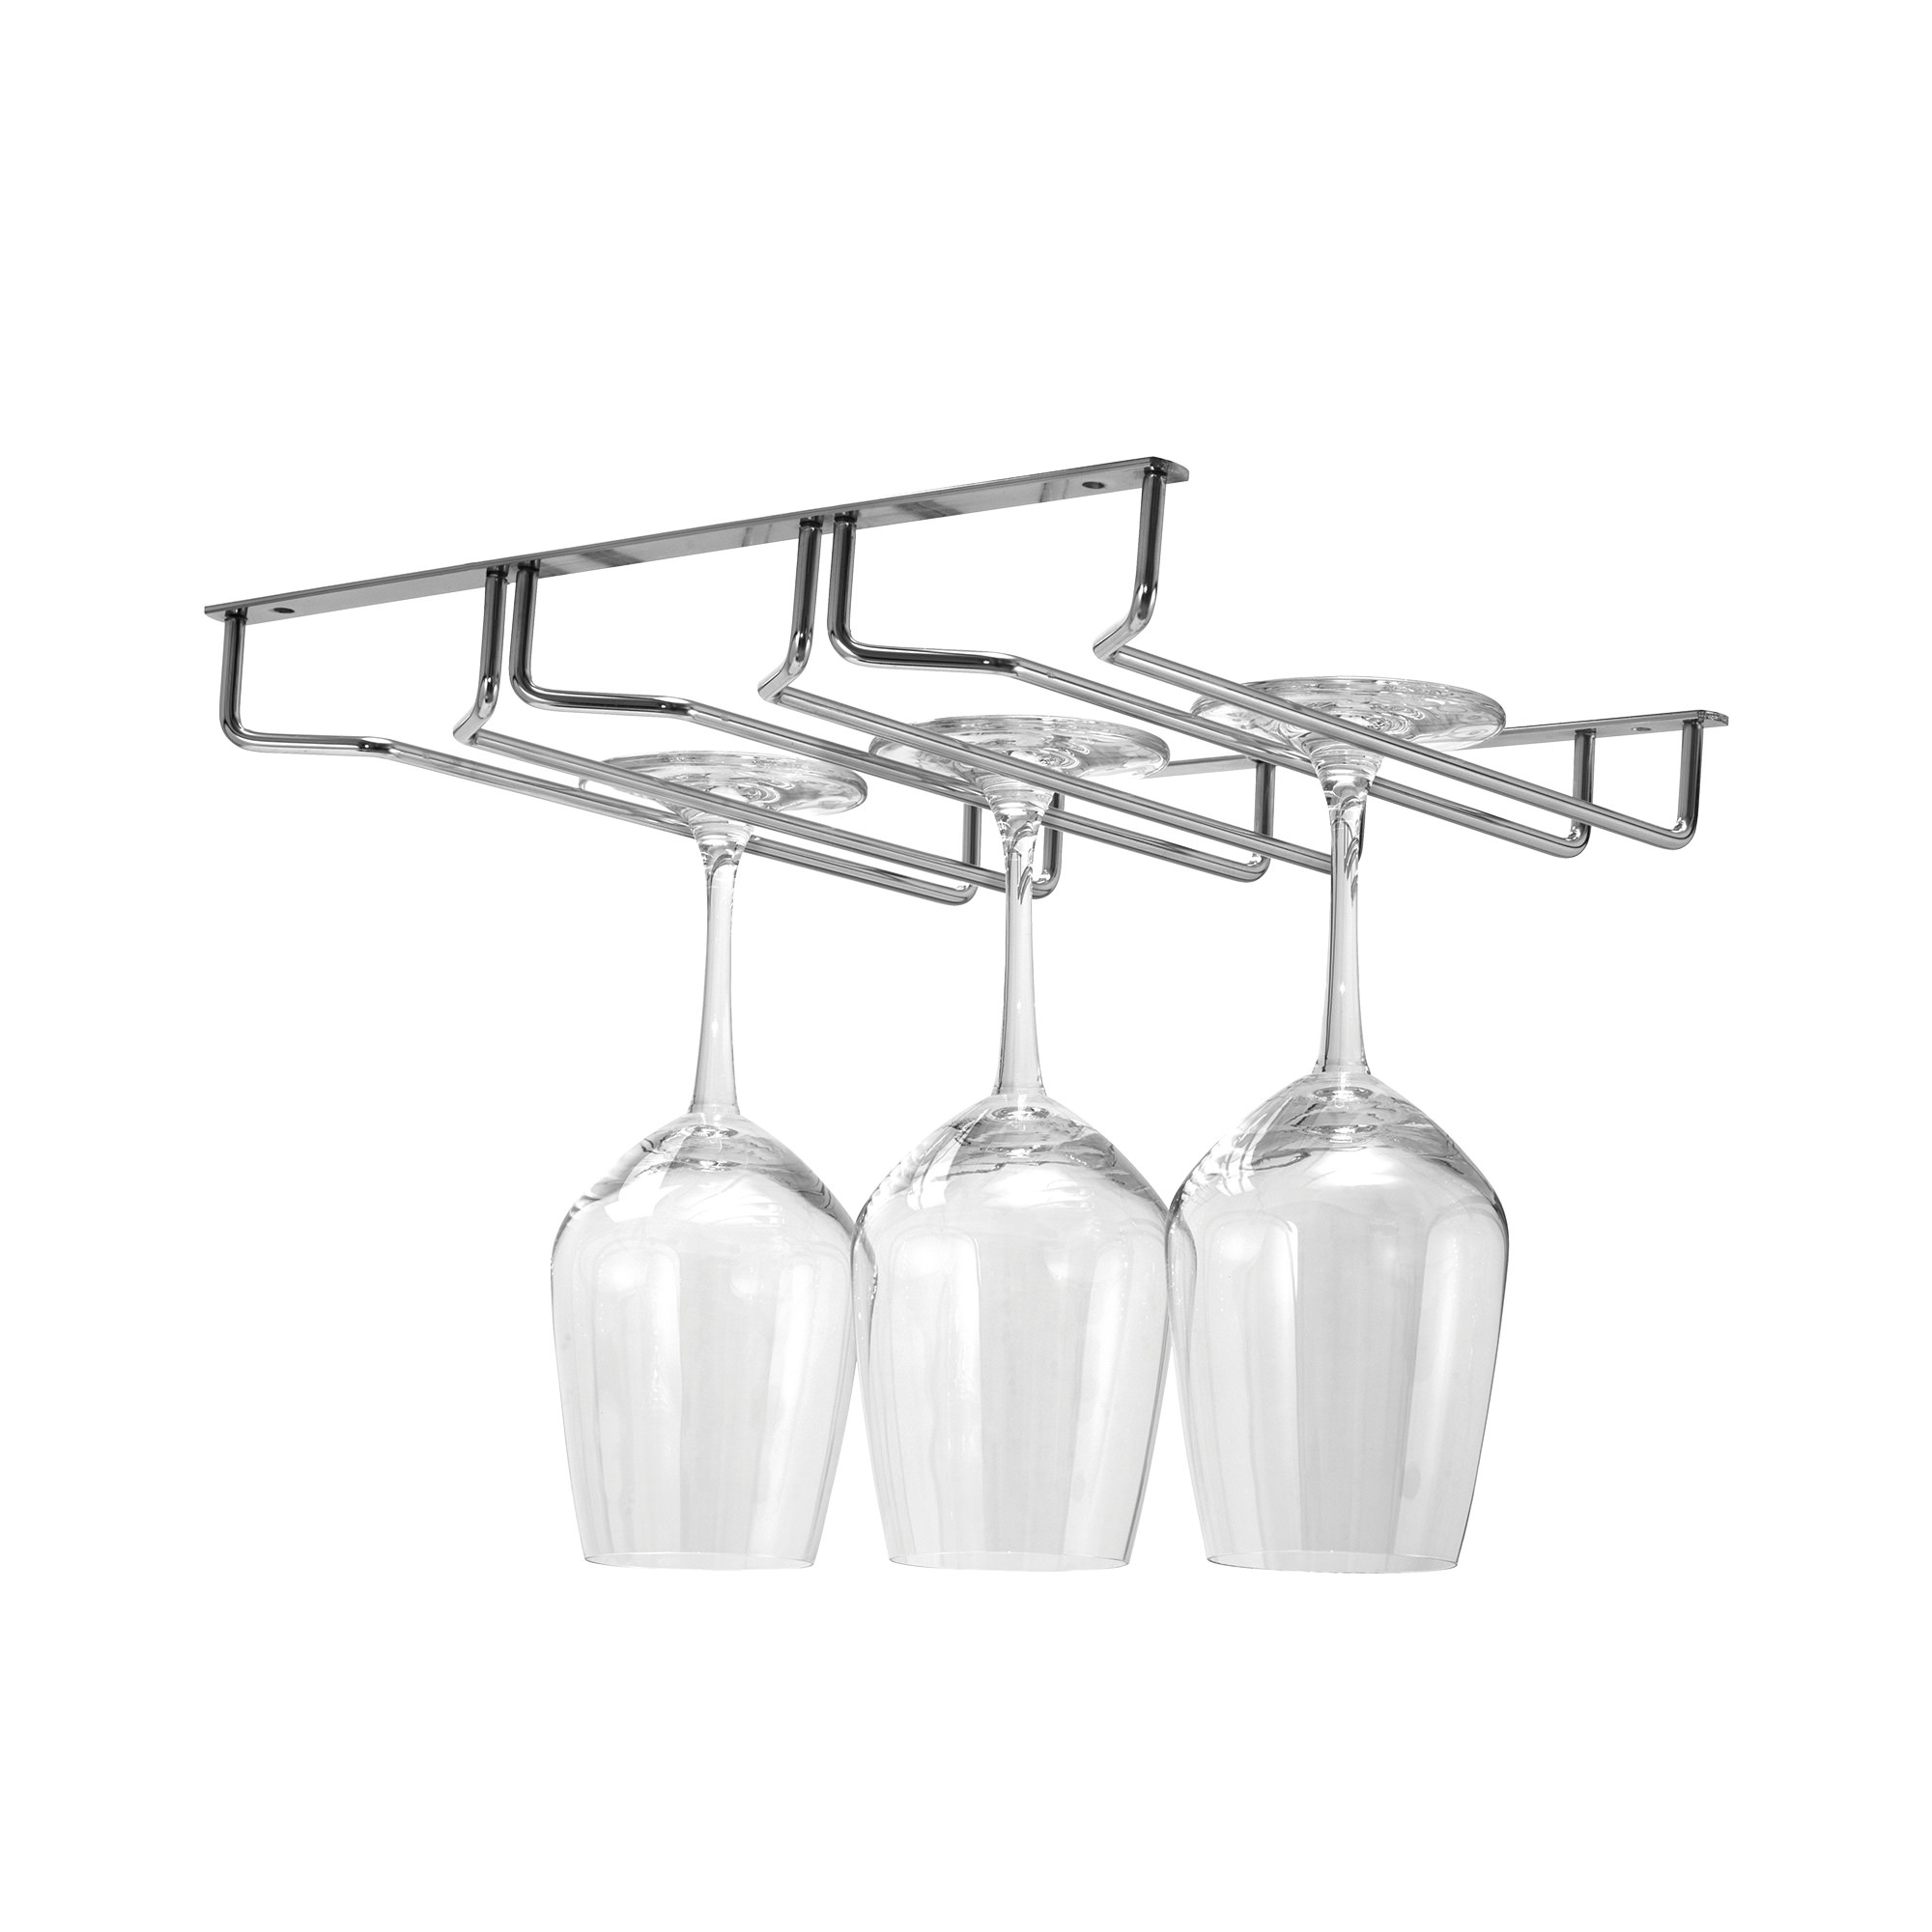 Avanti Stemware Wine Glass Rack Triple Row Image 1